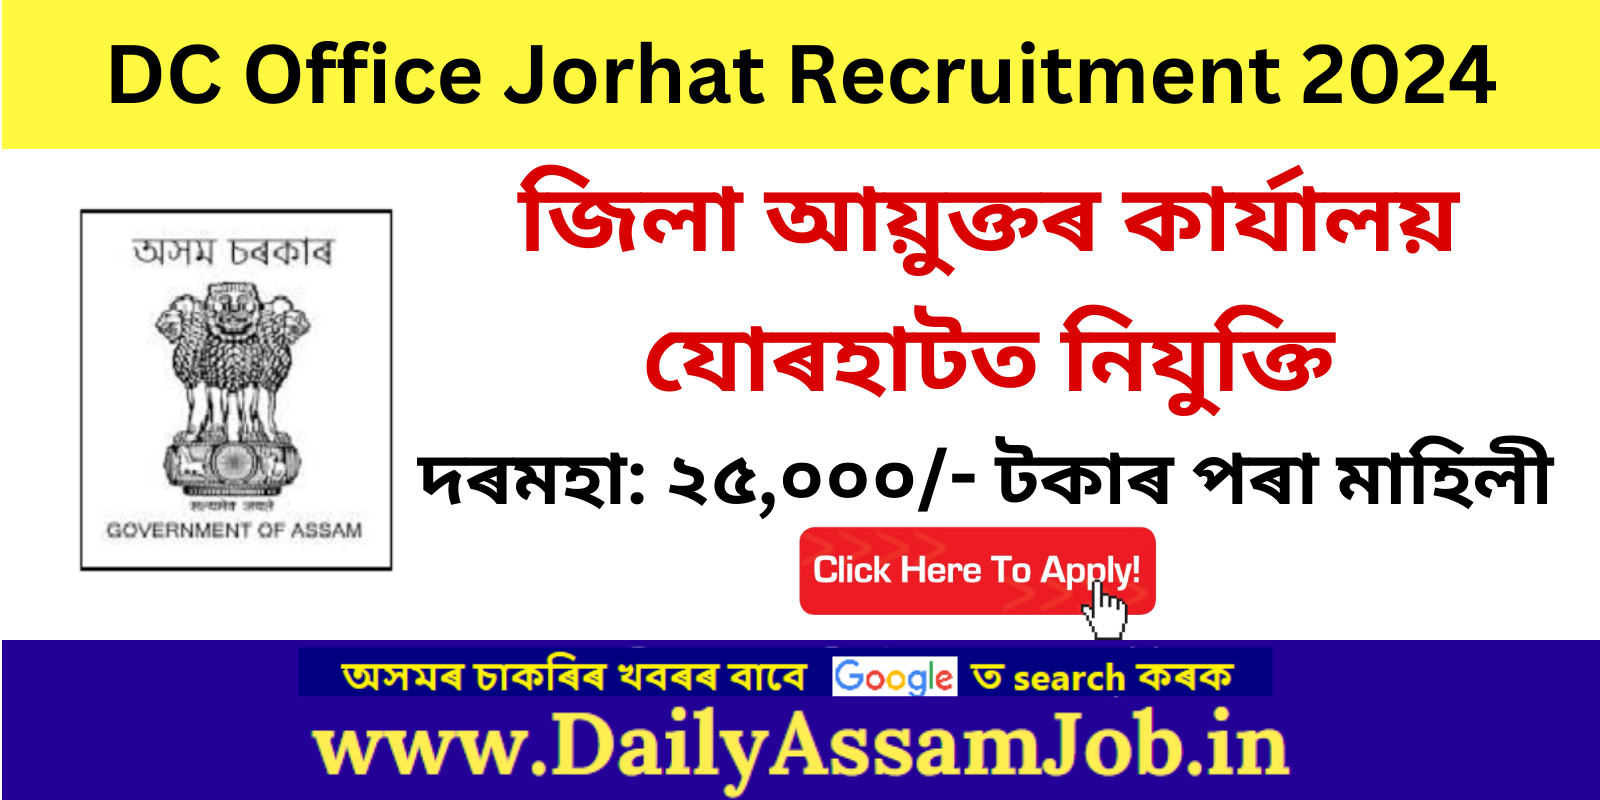 DC Office Jorhat Recruitment 2024 for 05 GIS Assistant Vacancy